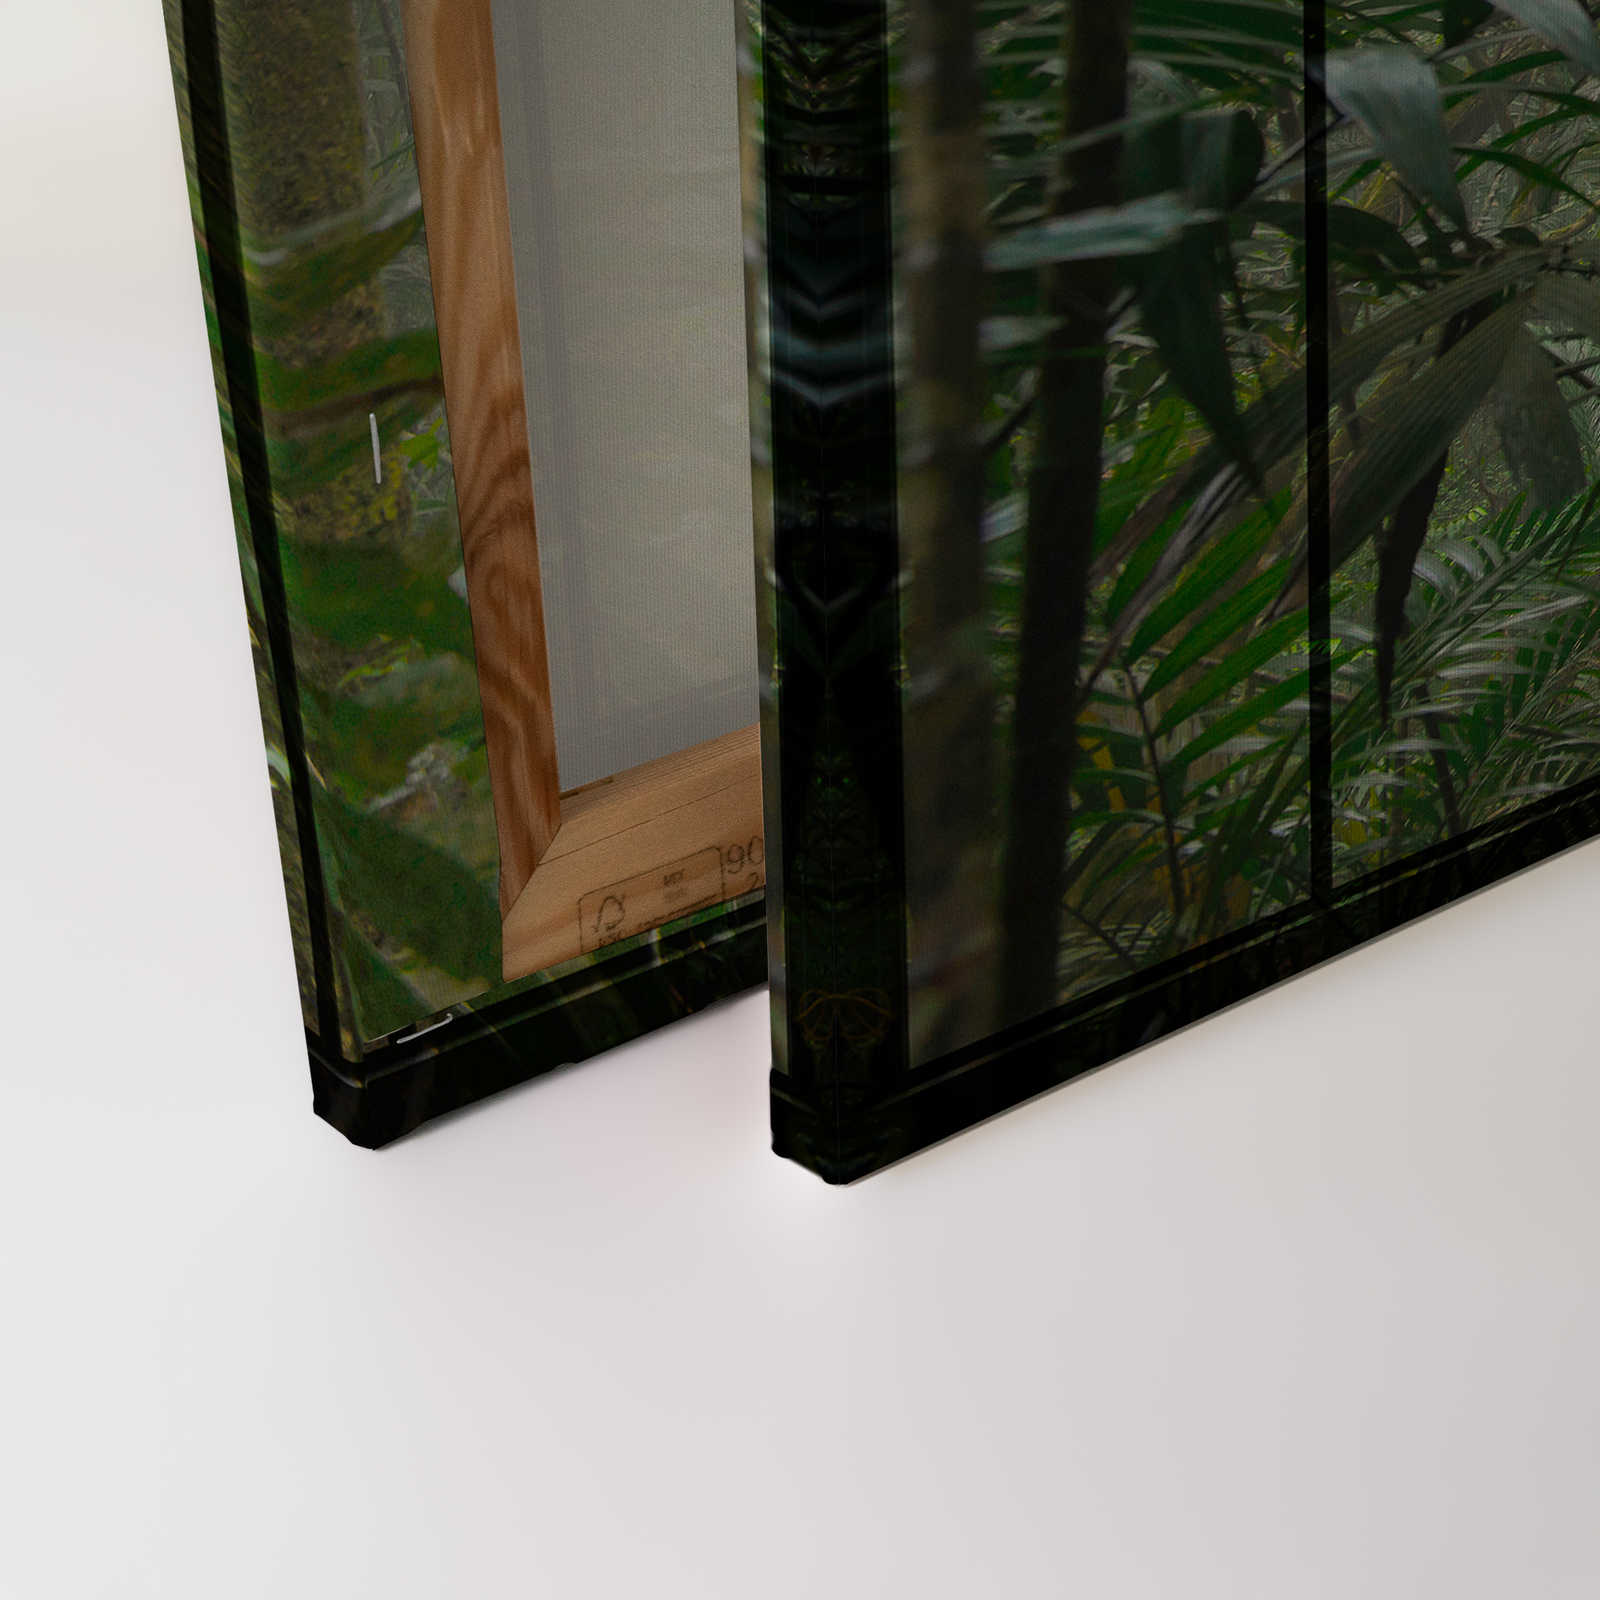             Rainforest 1 - Loft window canvas painting with jungle view - 0.90 m x 0.60 m
        